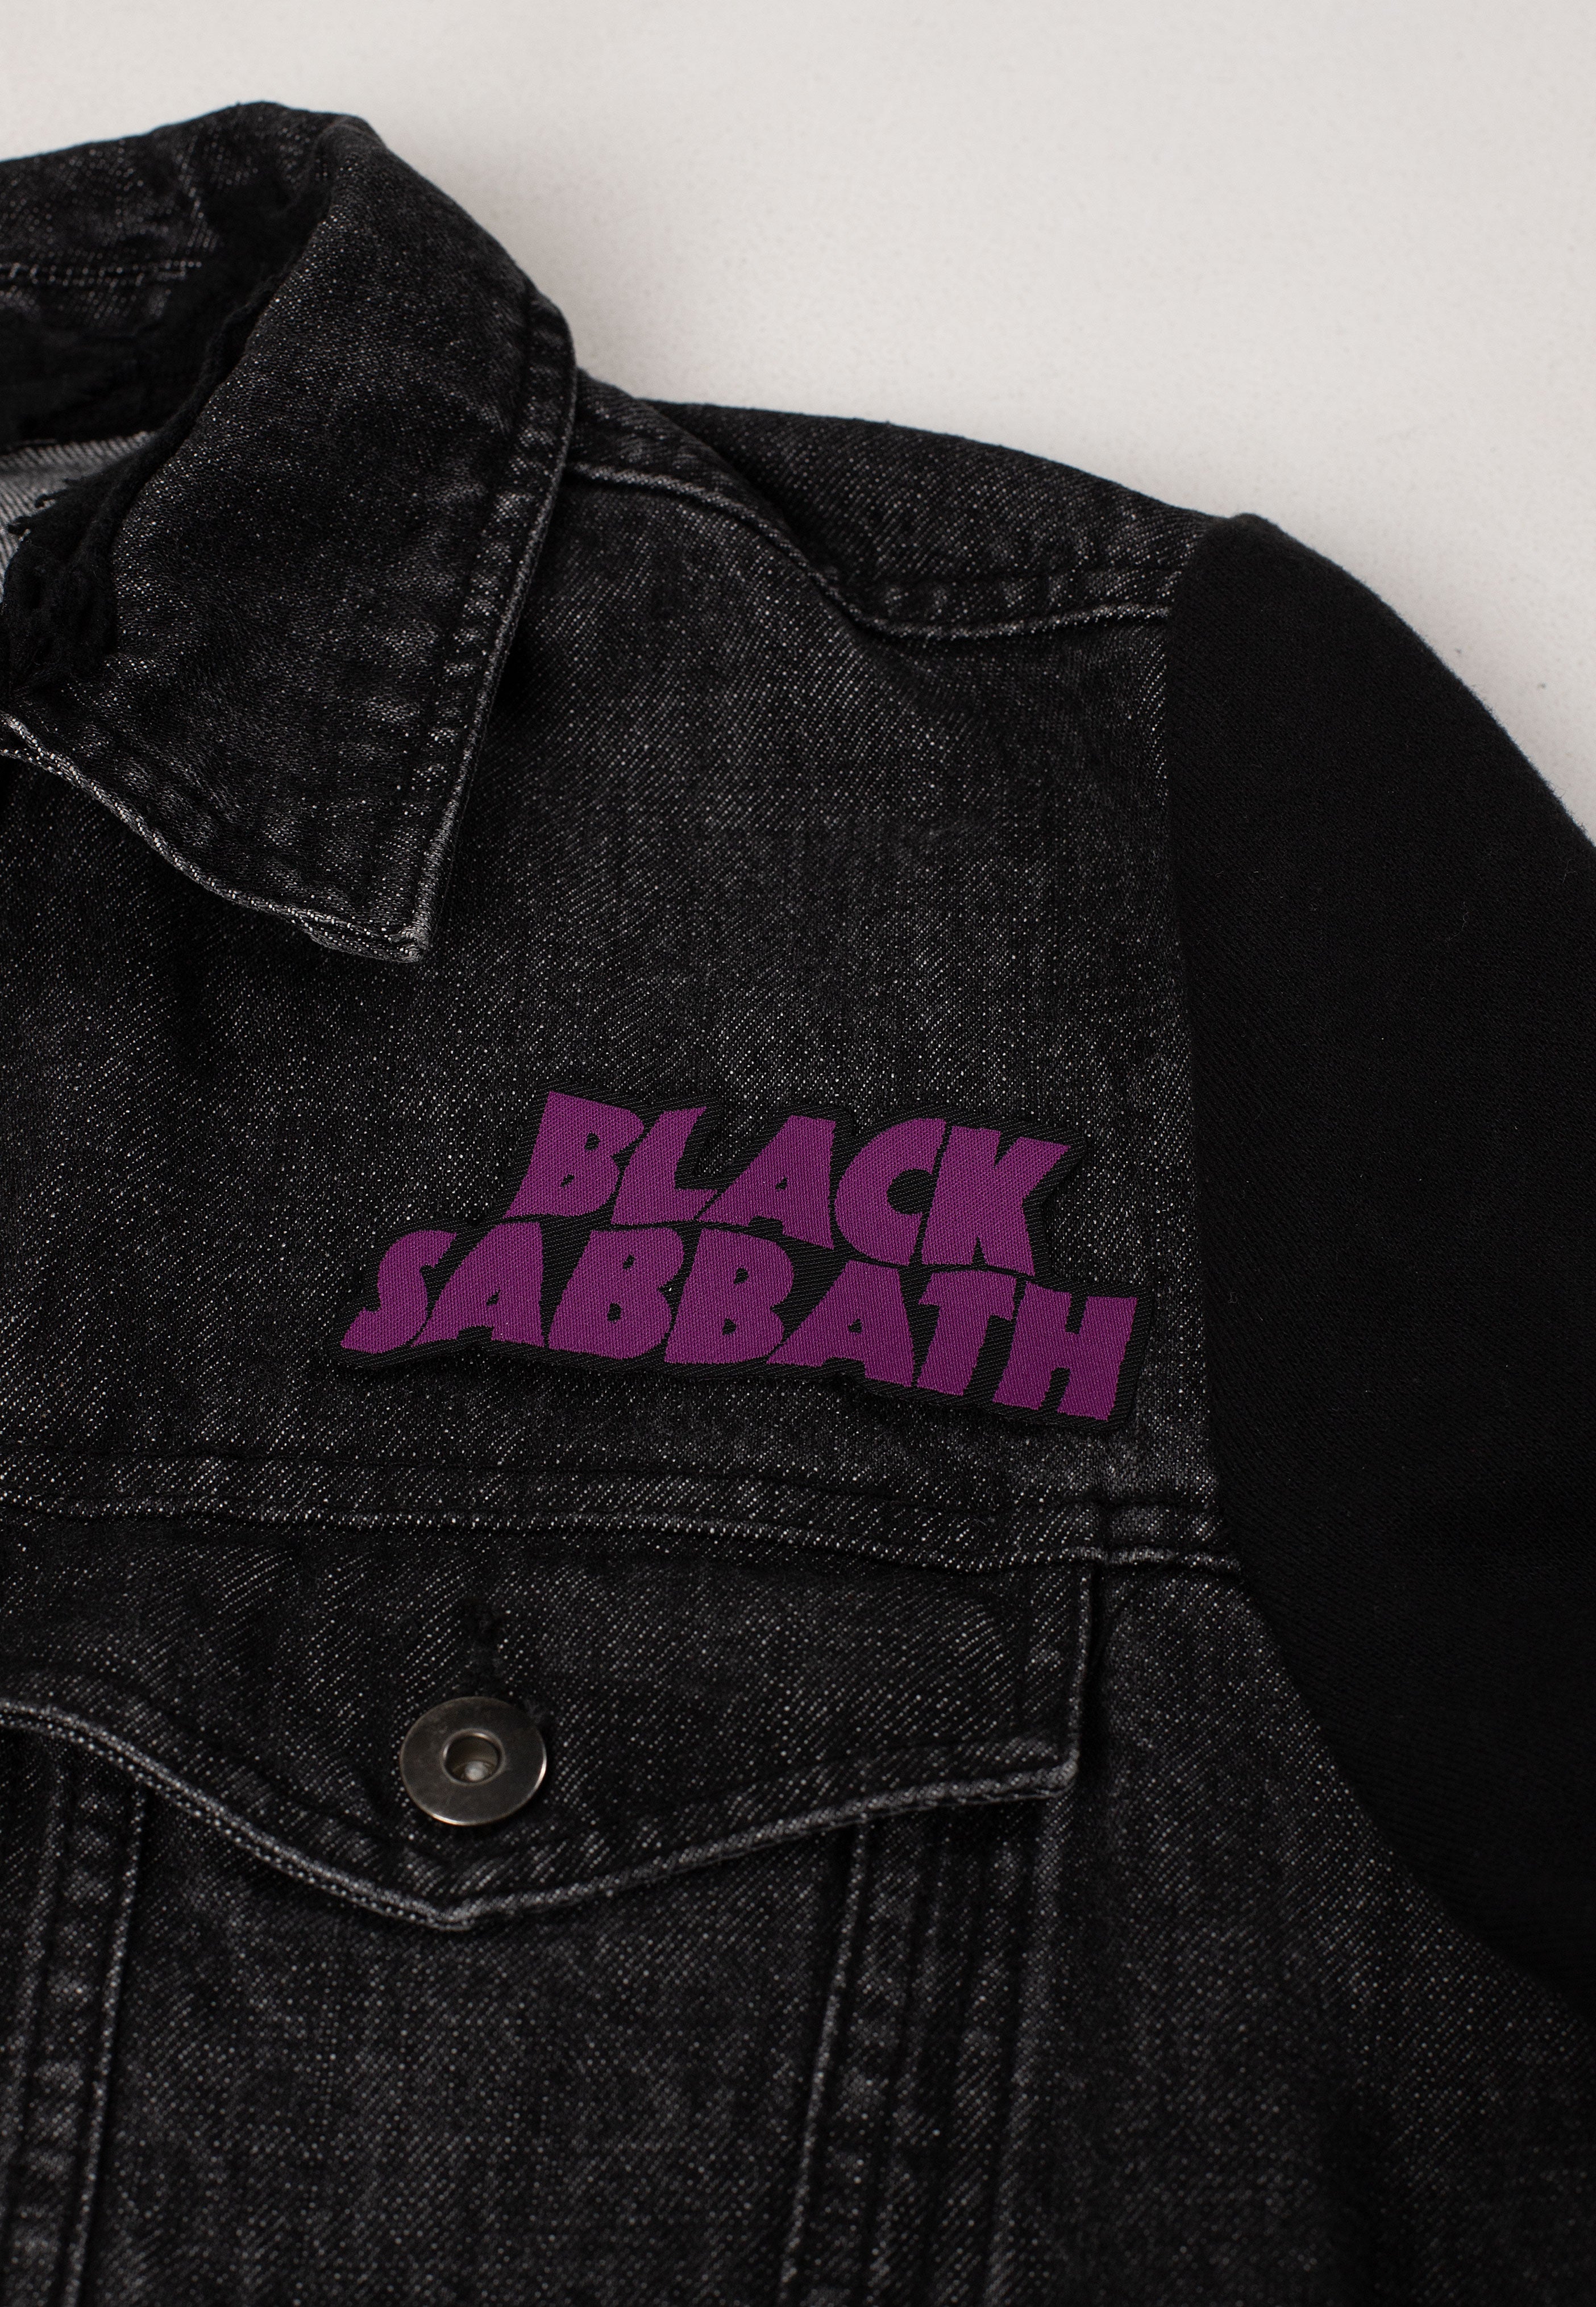 Black Sabbath - Logo Cut Out - Patch